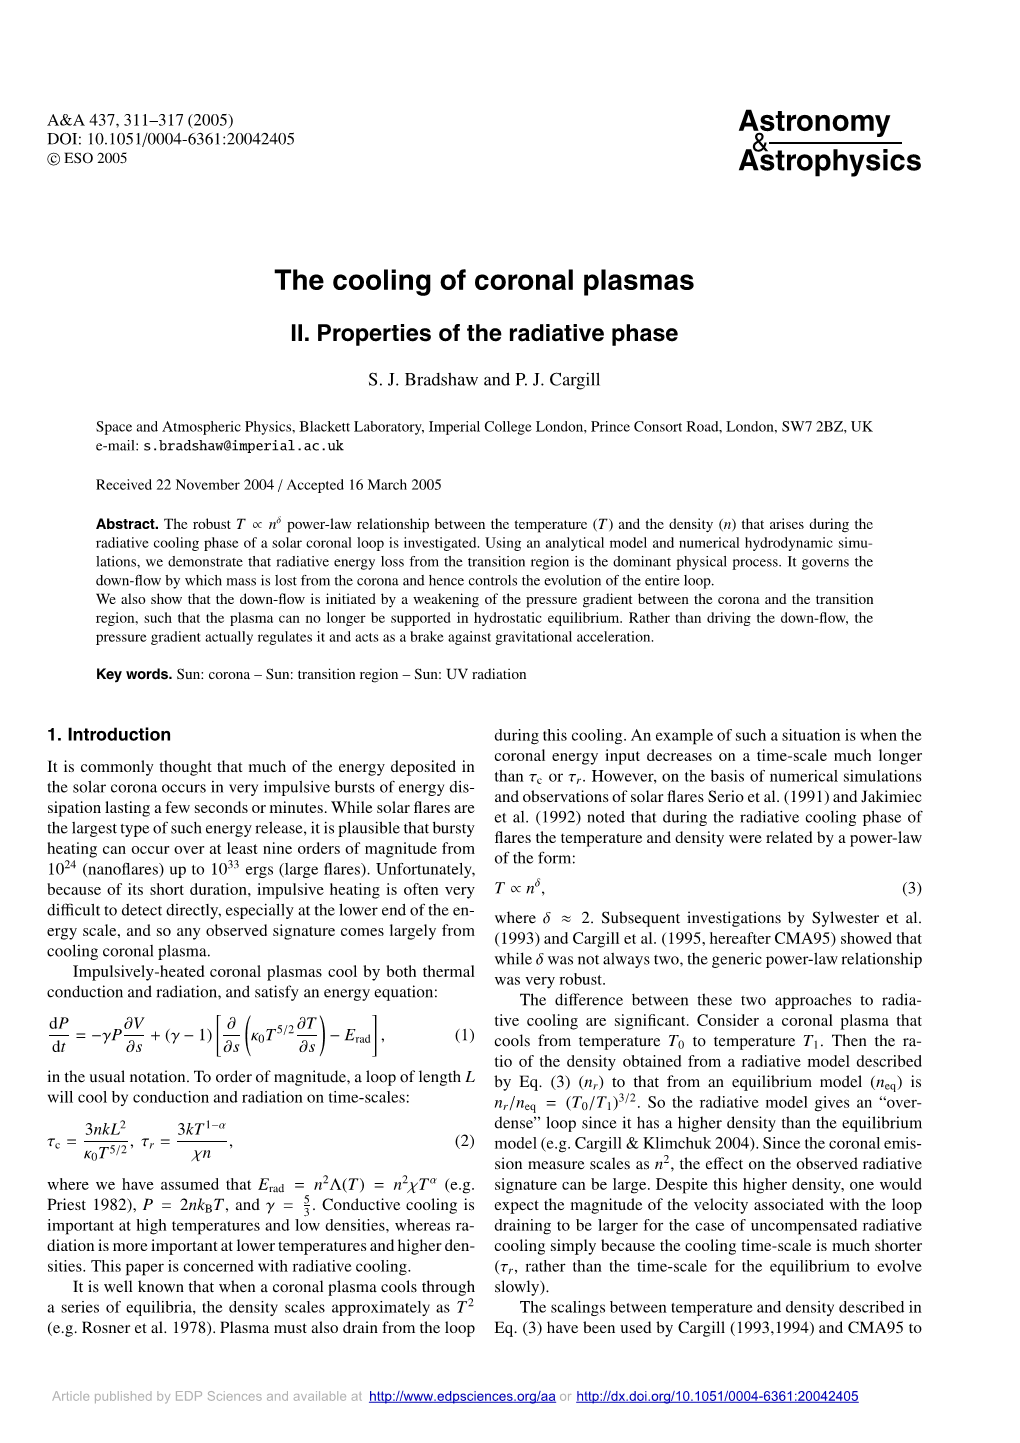 The Cooling of Coronal Plasmas